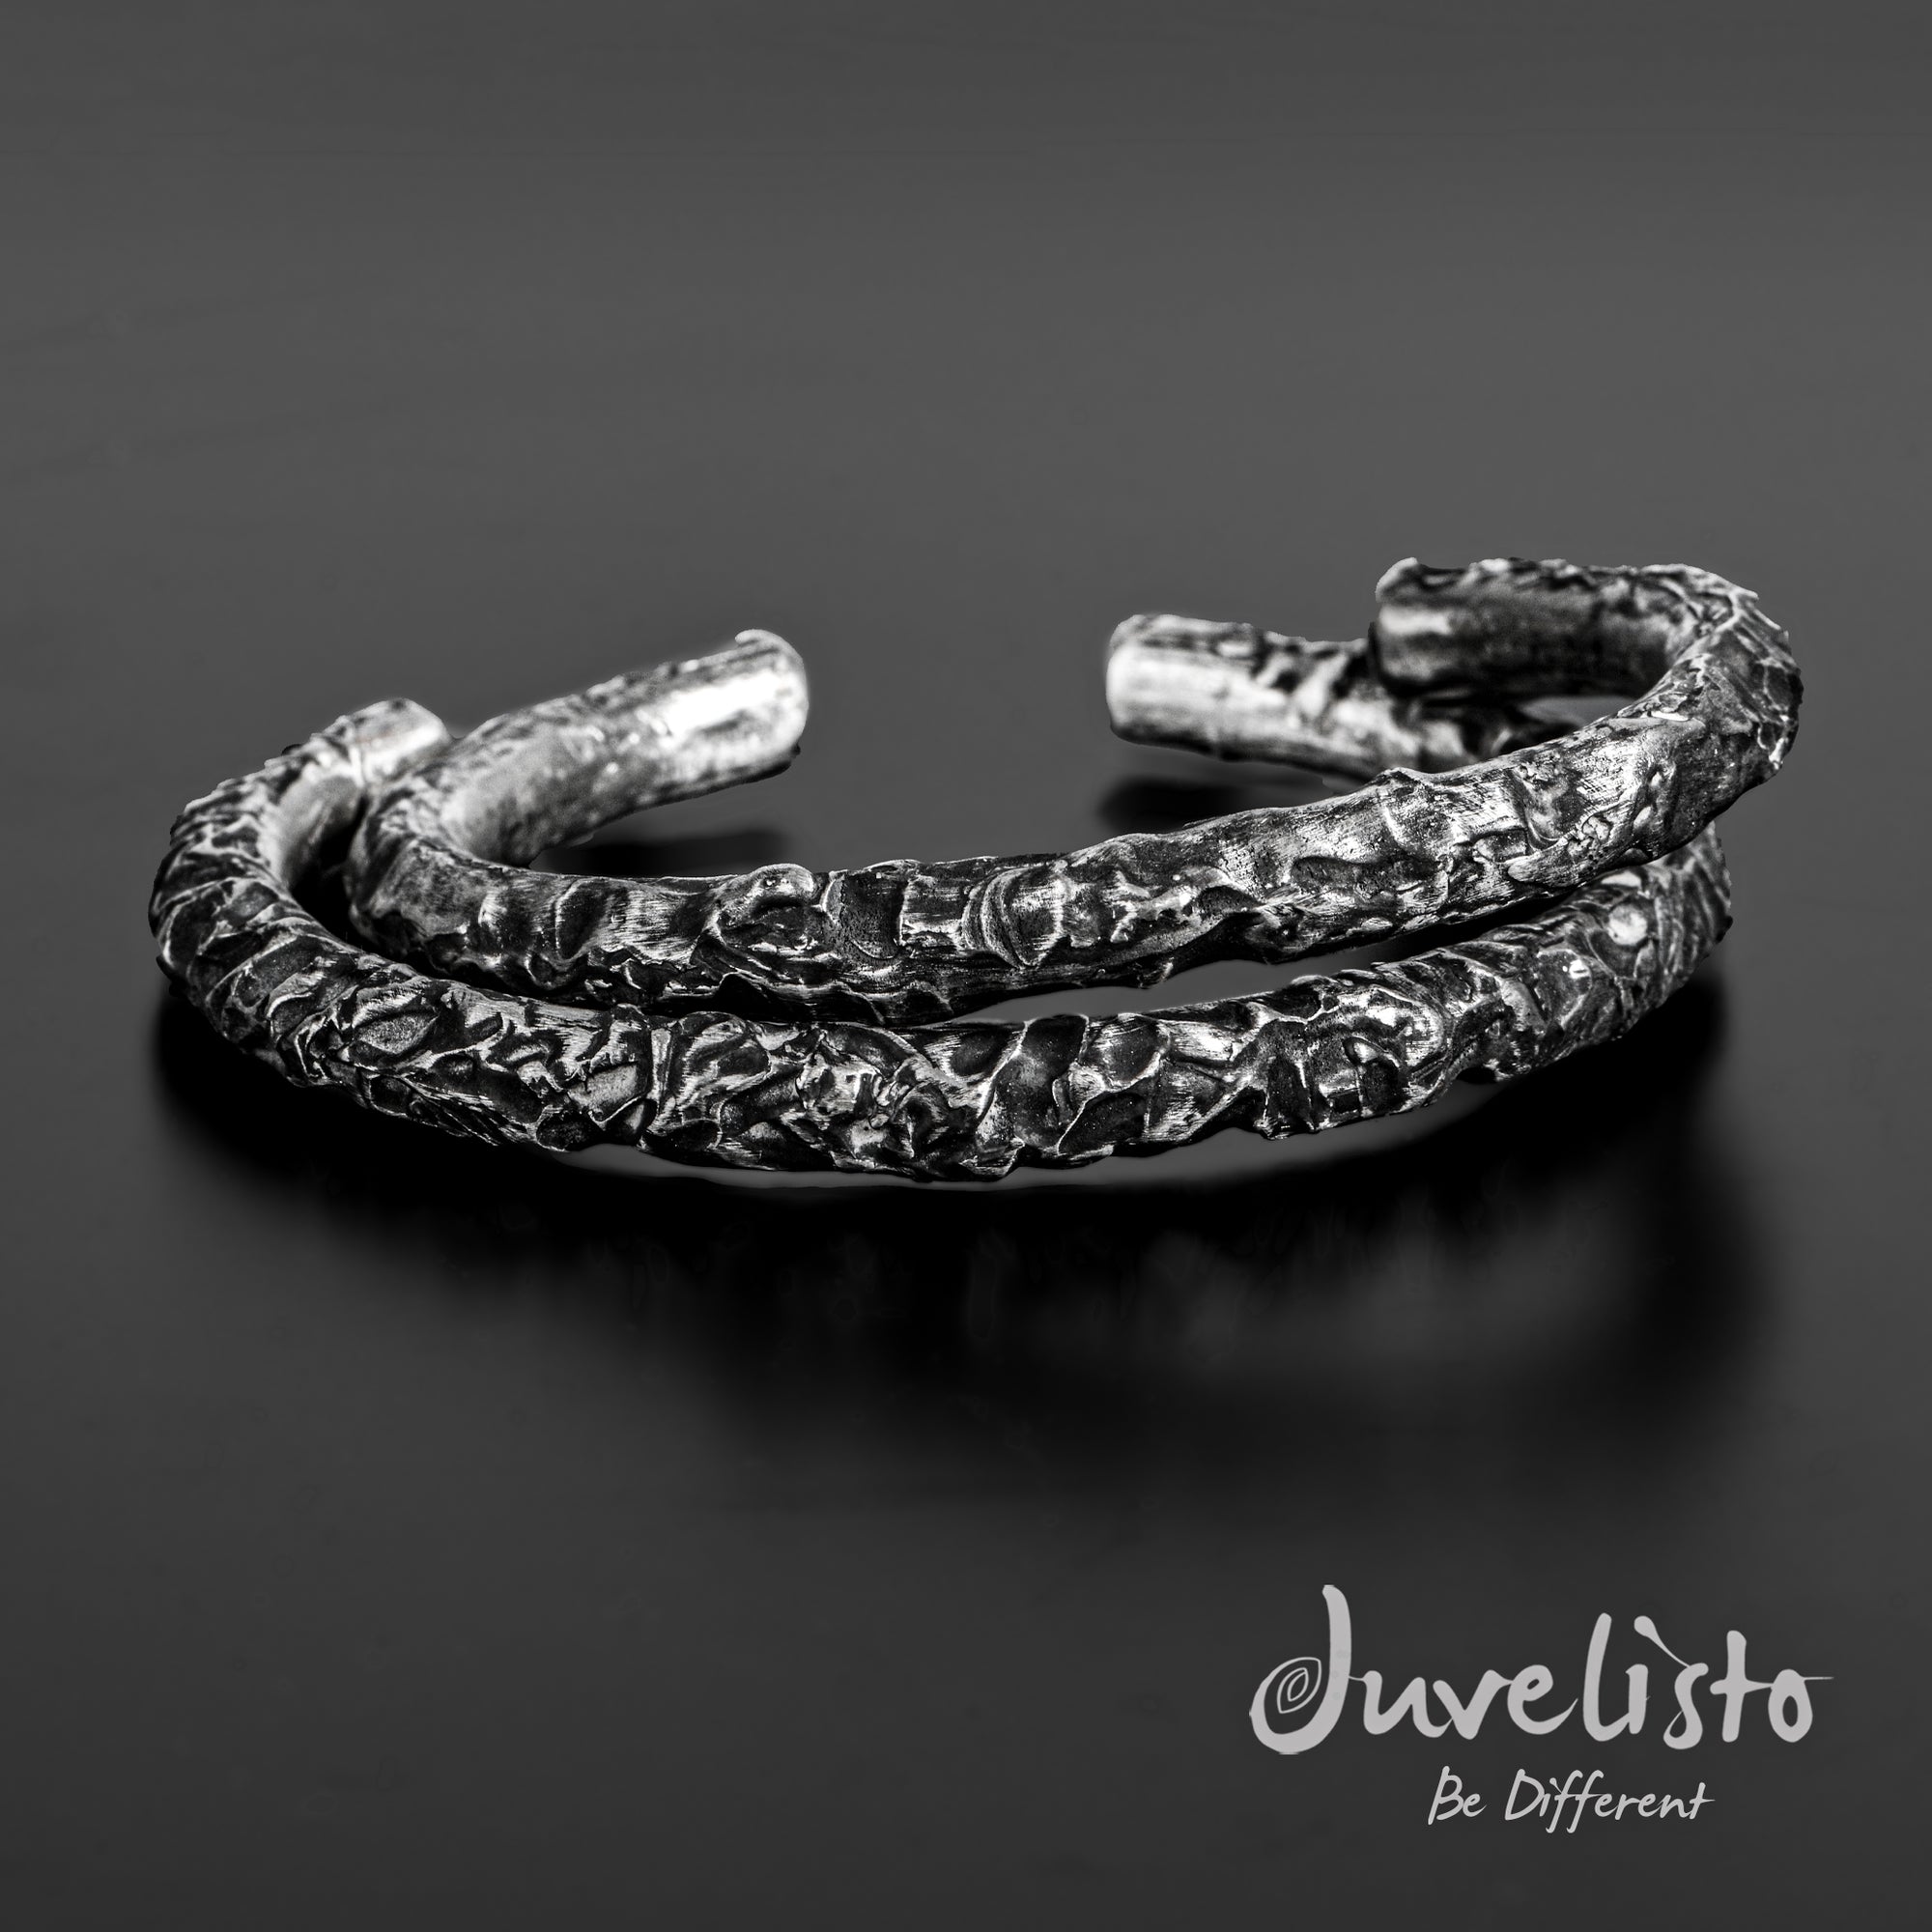 Juvelisto Design | Sterling Silver Cuff Bracelet